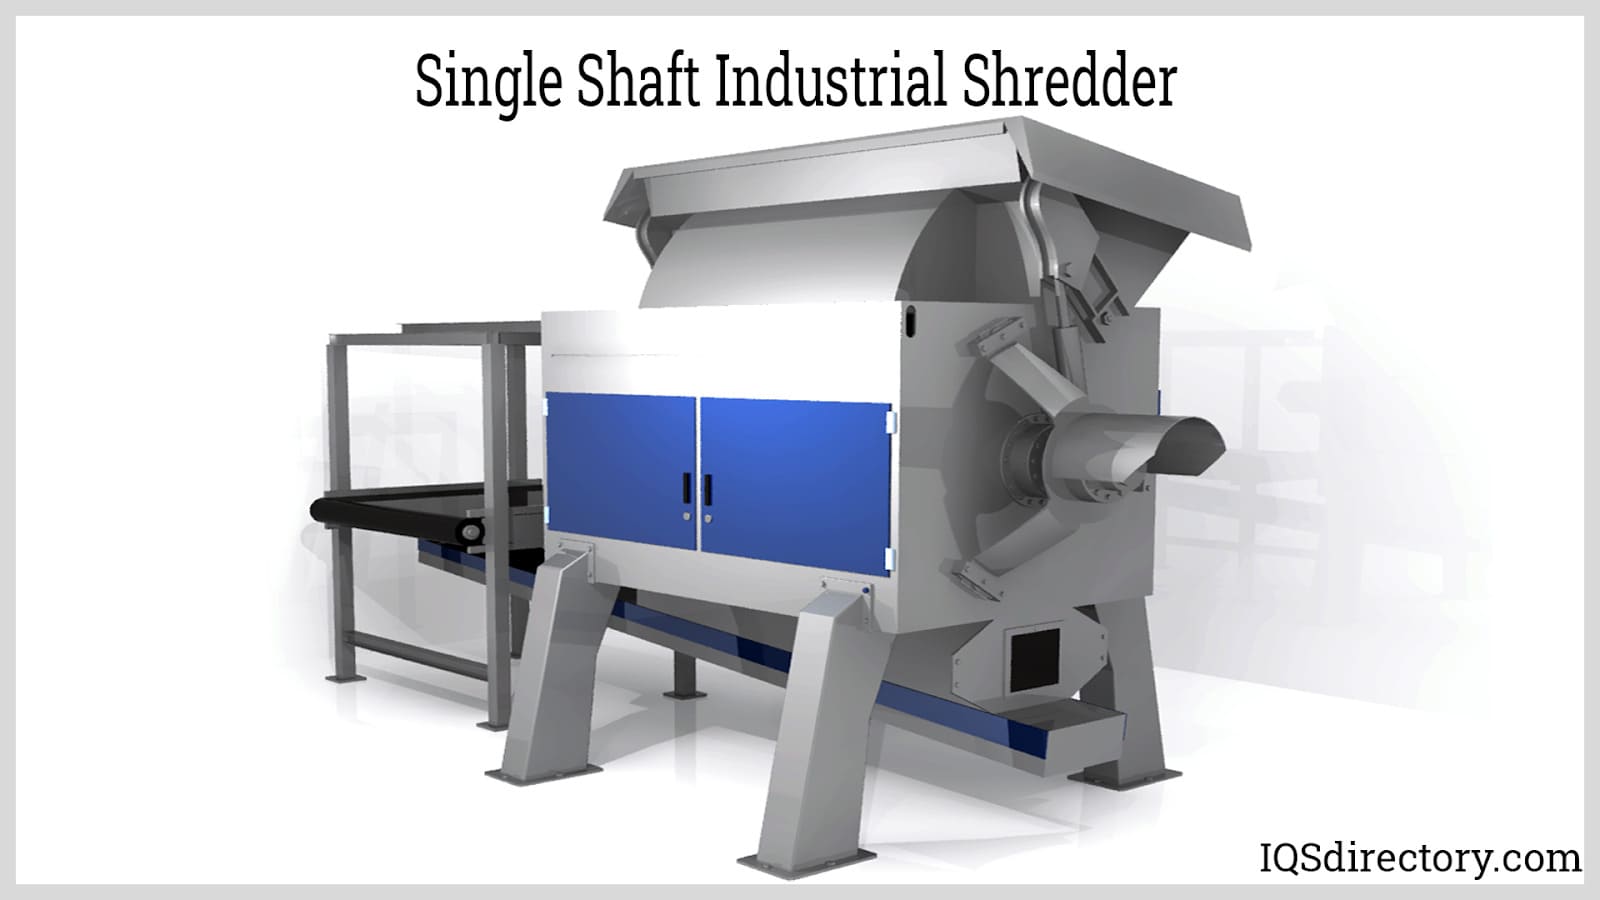 https://www.iqsdirectory.com/articles/shredder/industrial-shredder/single-shaft-industrial-shredder.jpg